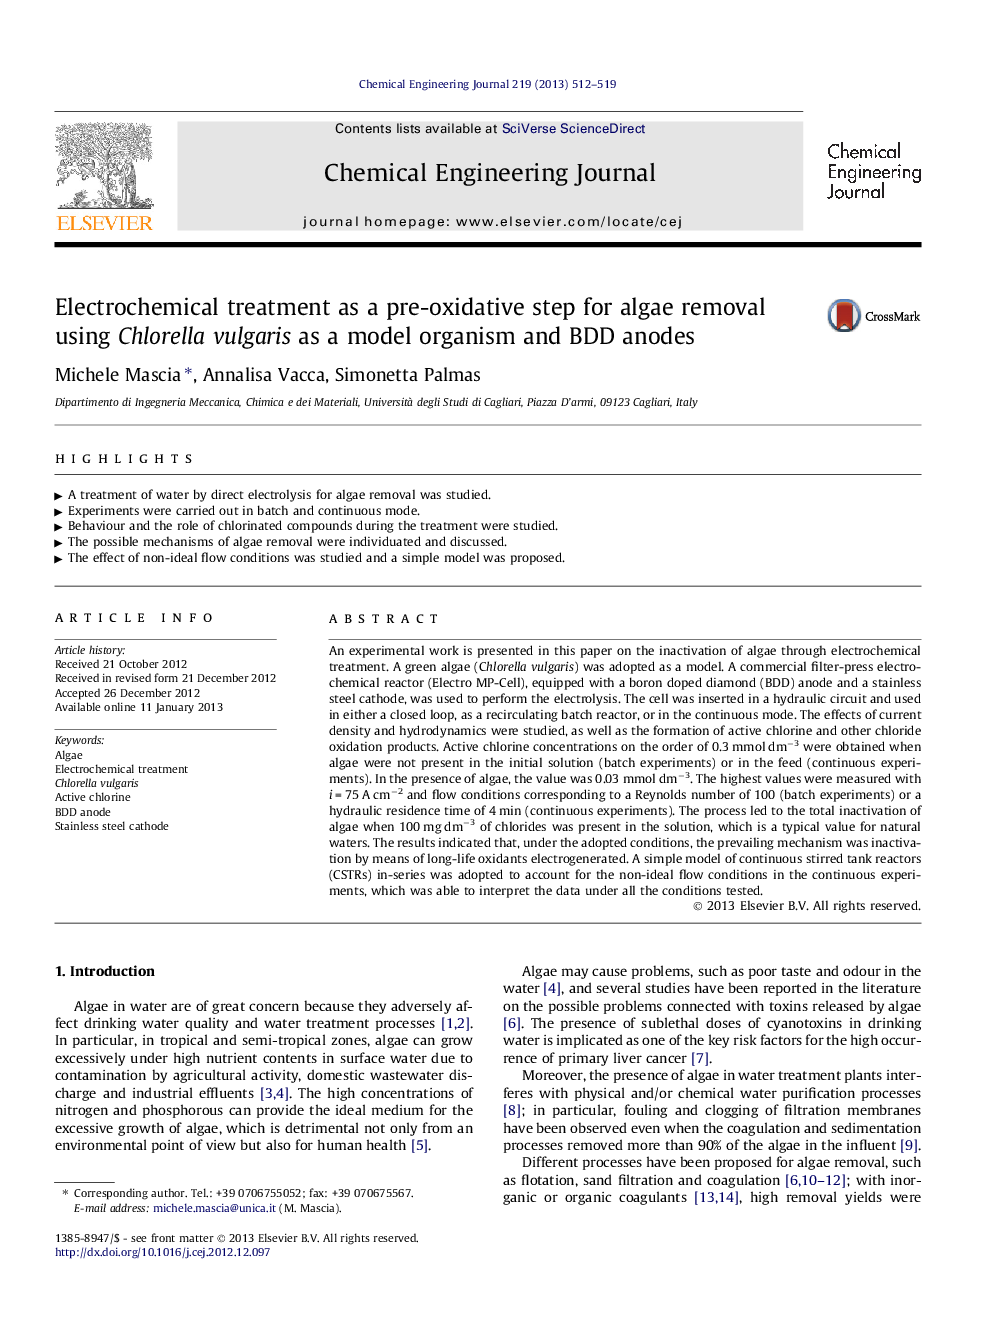 Electrochemical treatment as a pre-oxidative step for algae removal using Chlorella vulgaris as a model organism and BDD anodes